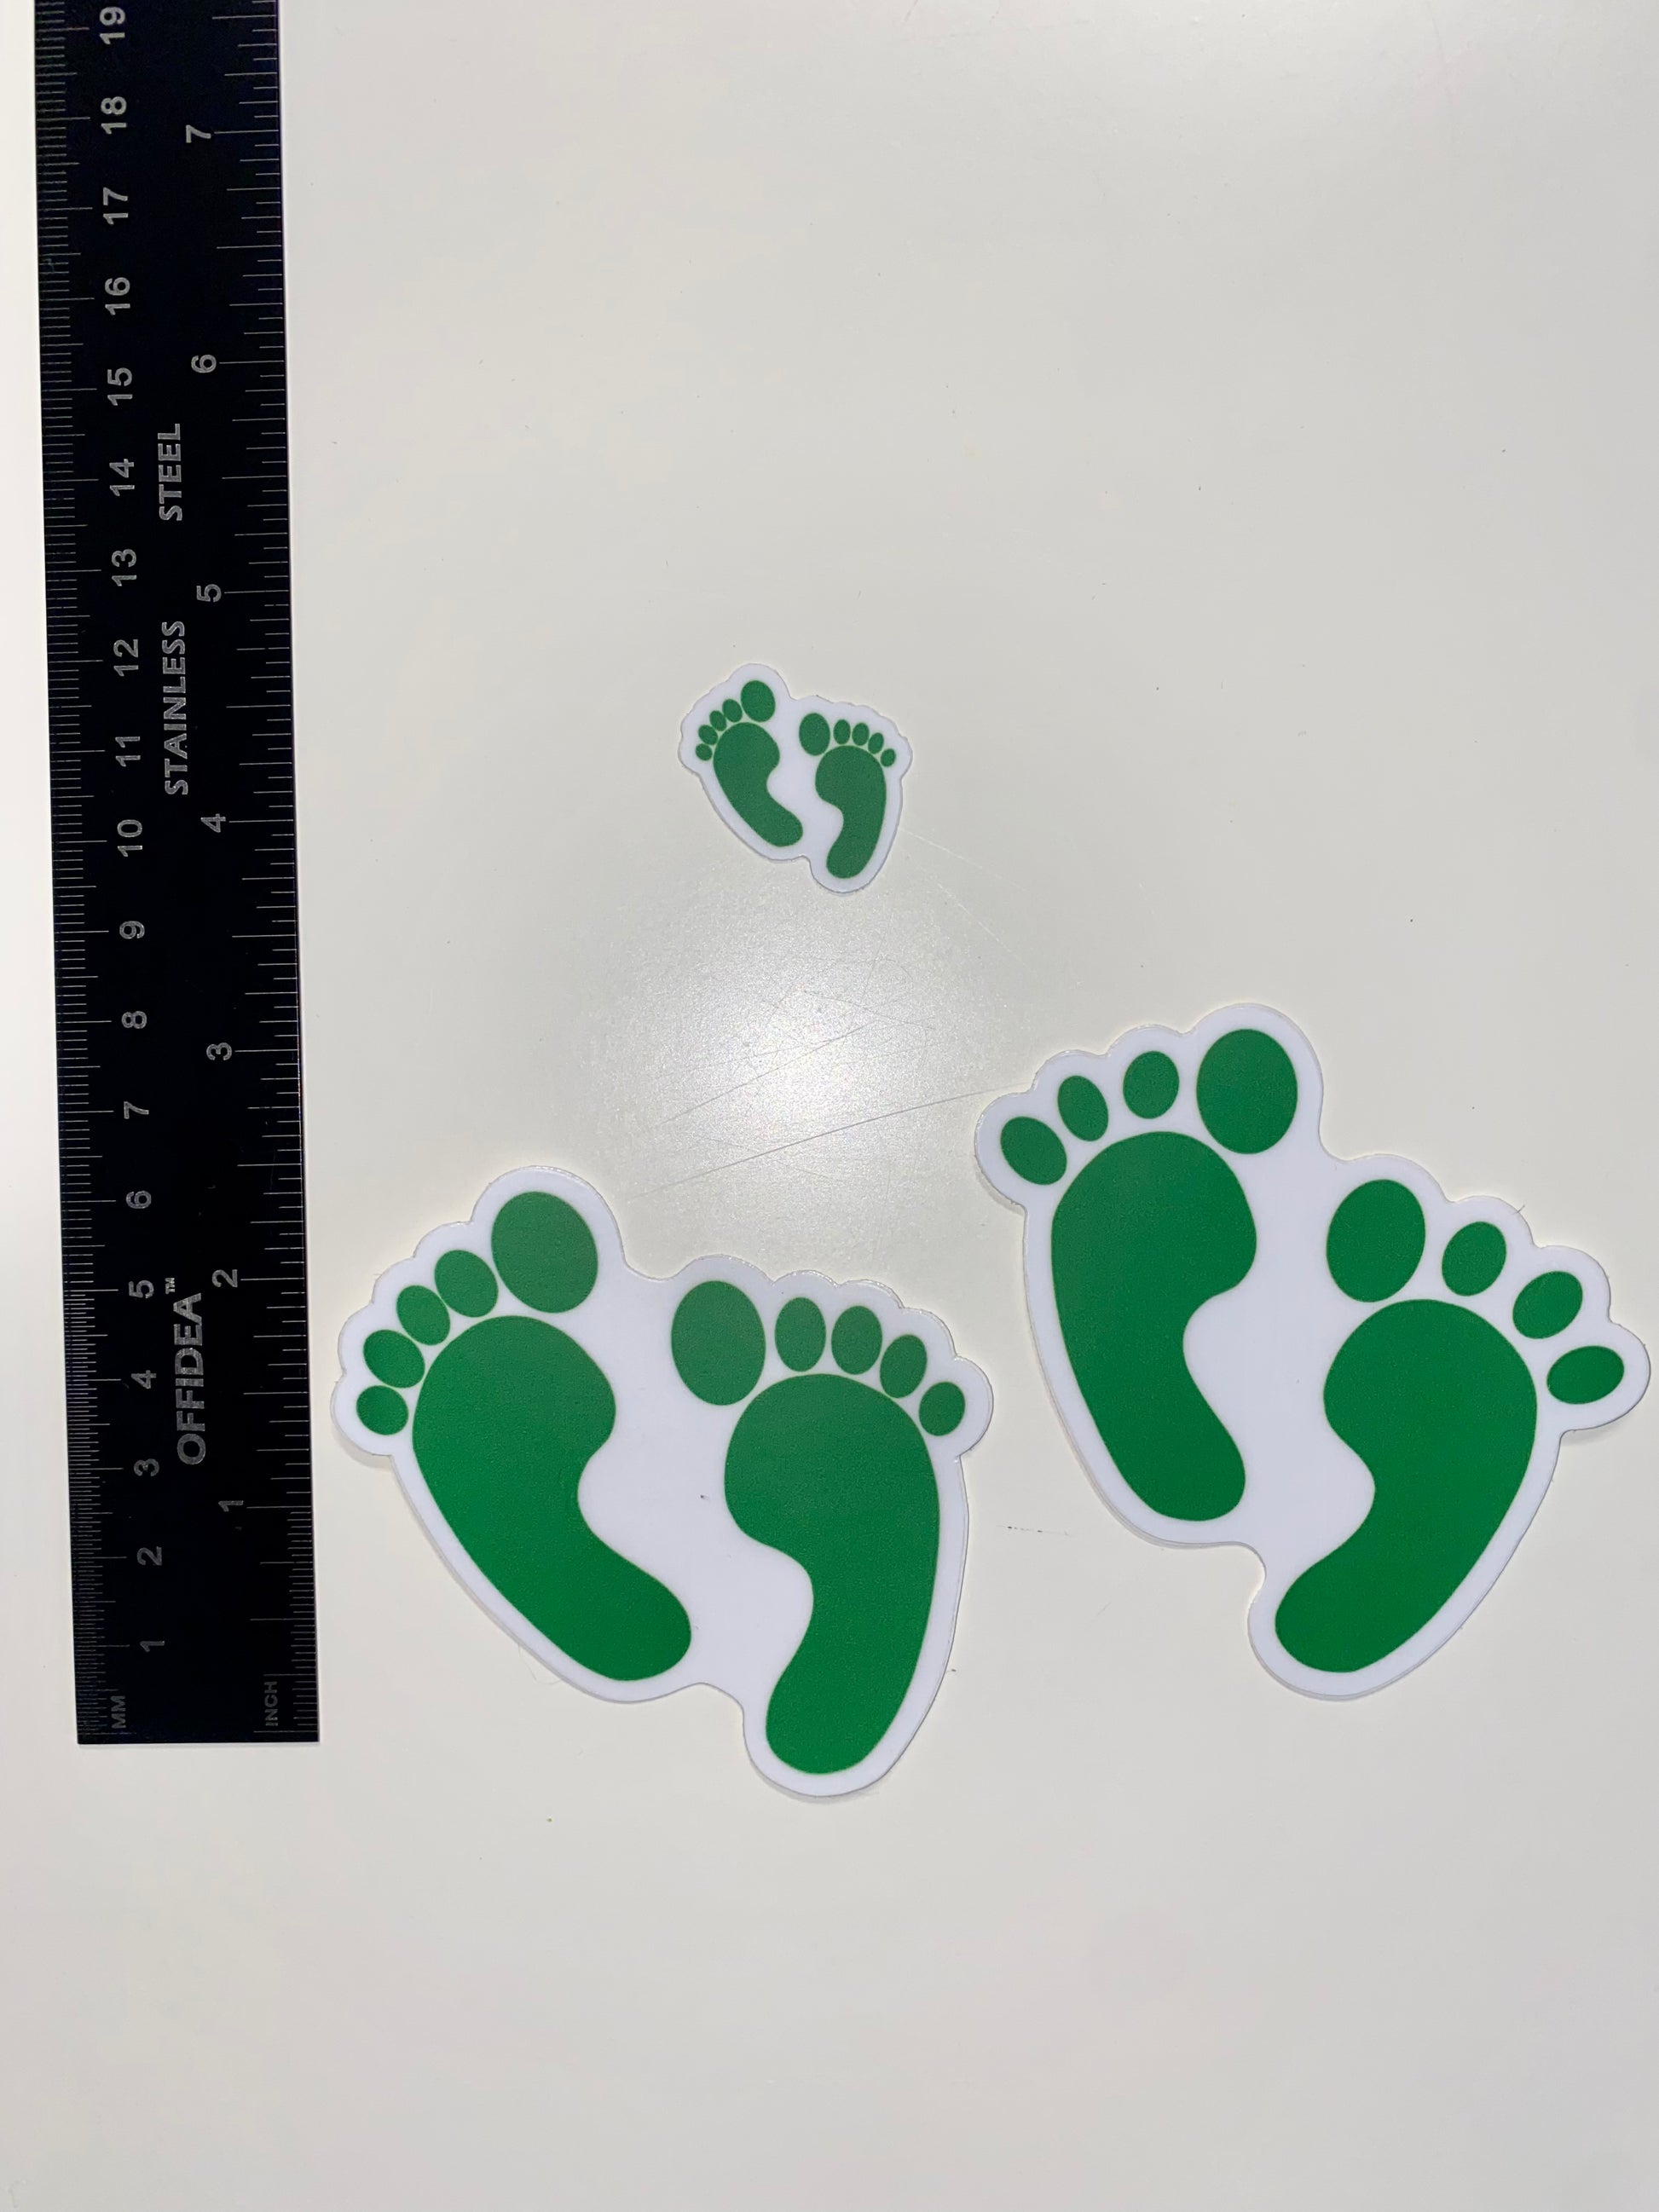 green baby feet